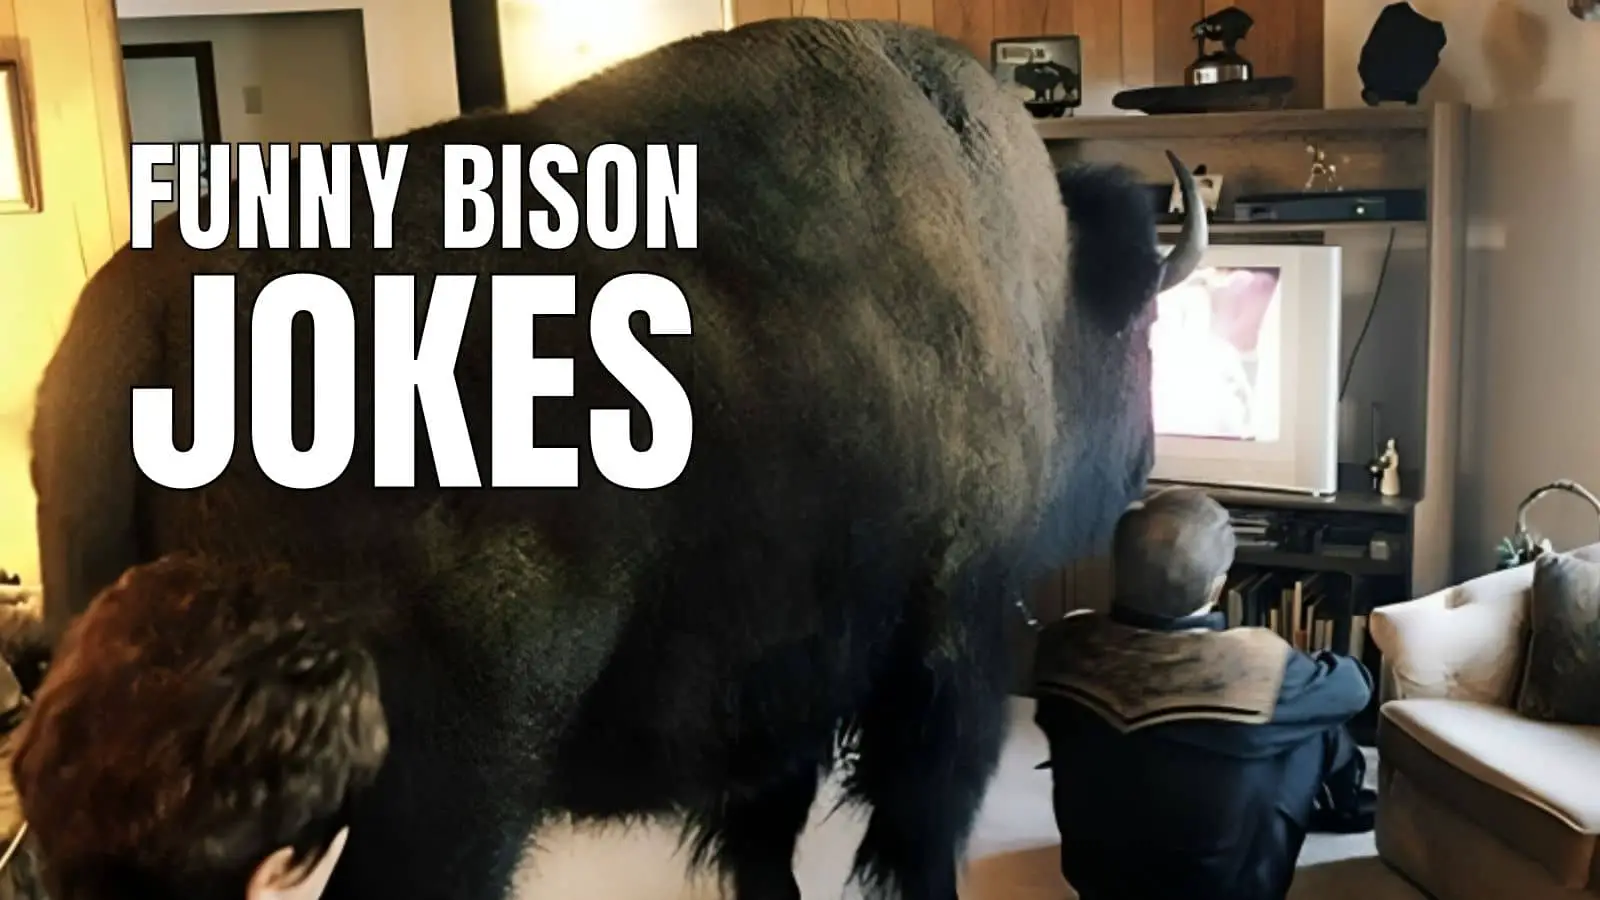 Funny Bison Jokes on Buffalo